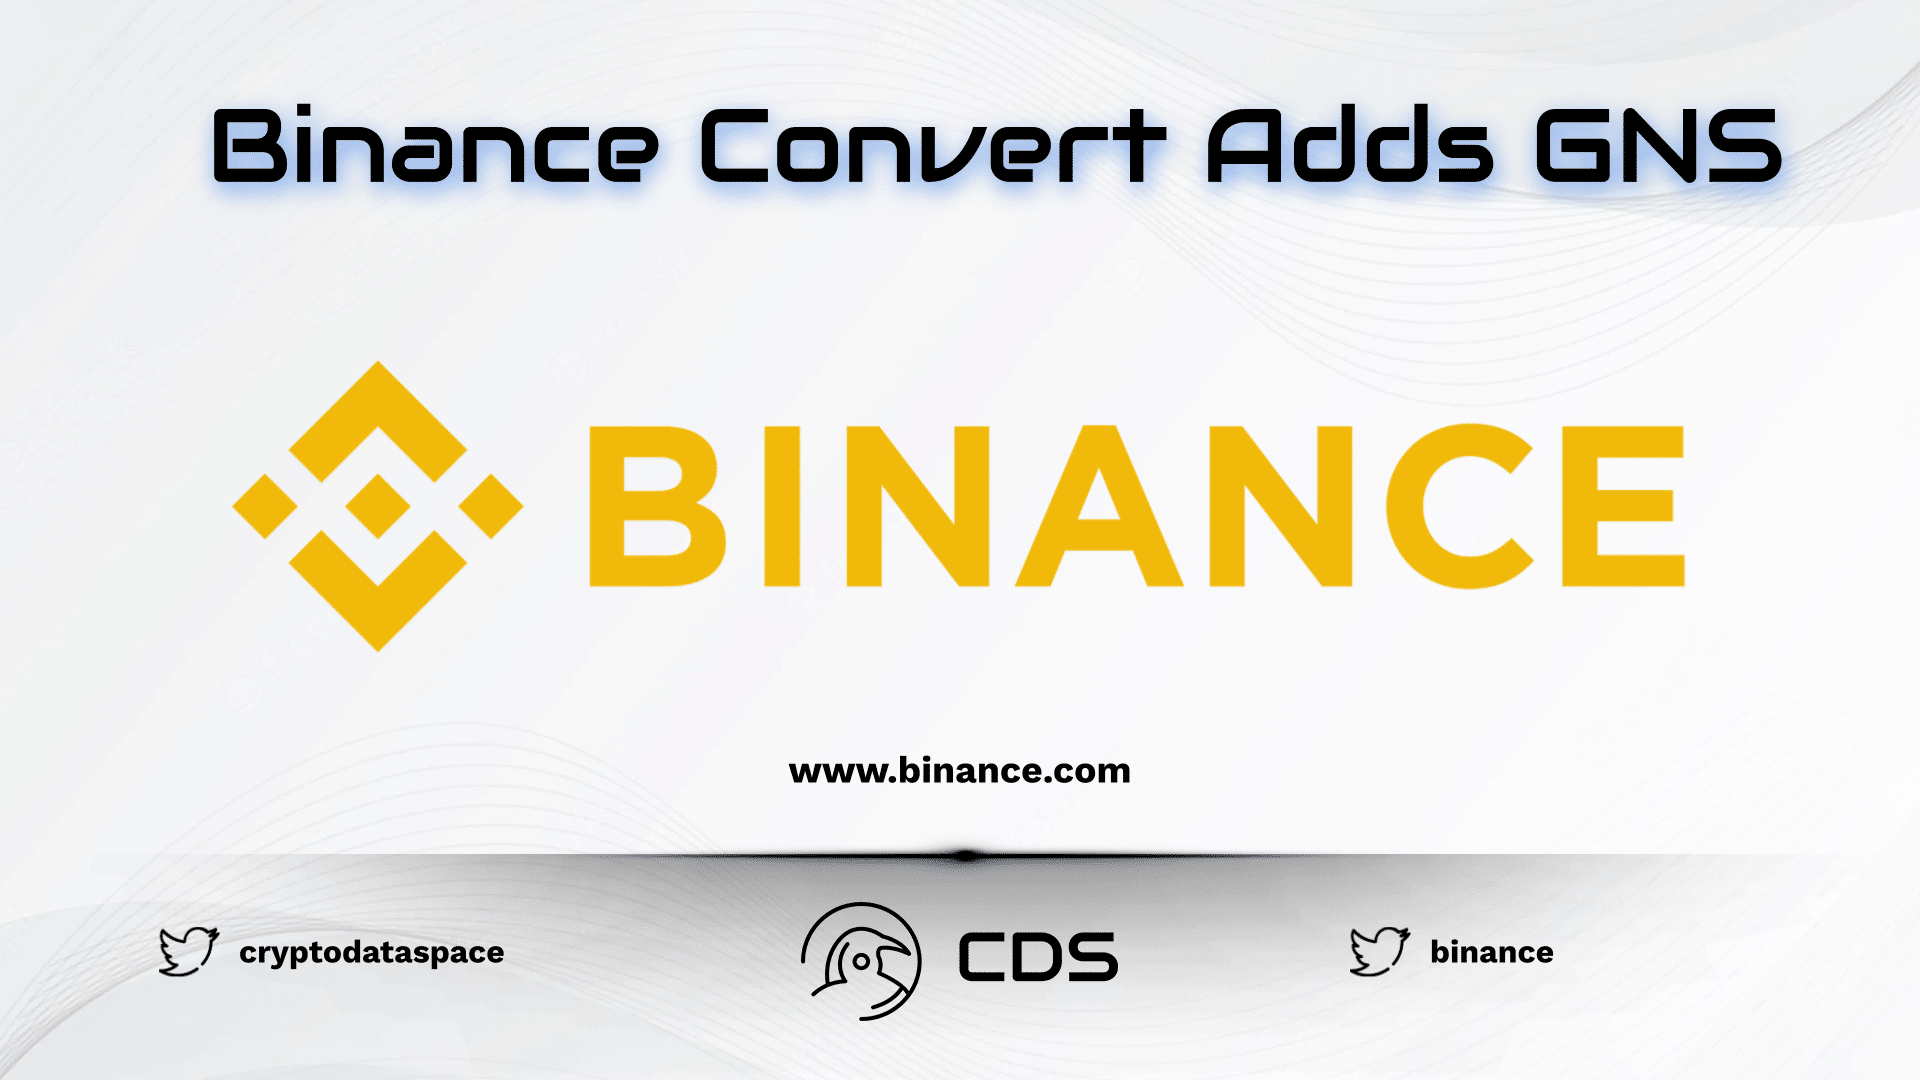 Binance Convert Adds GNS